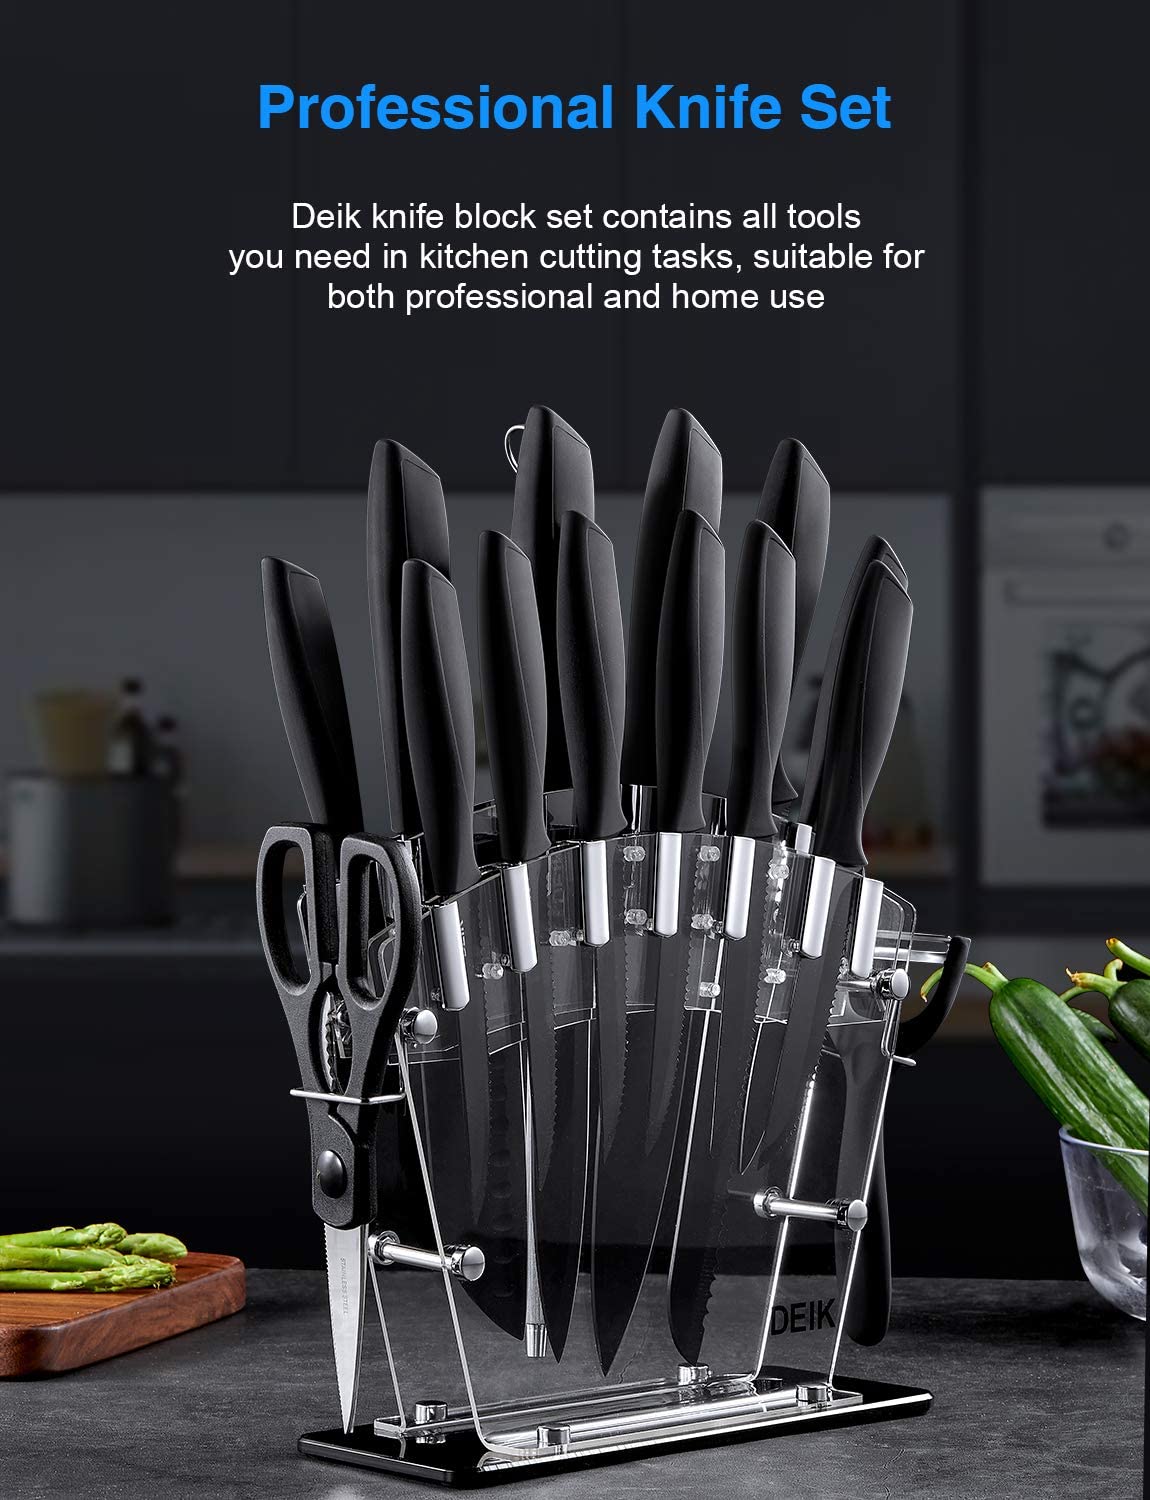  Home Hero 8 pcs Stainless Steel Steak Knife Set - Serrated  Steak Knives Set - Dishwasher Safe - (Black, Stainless Steel): Home &  Kitchen